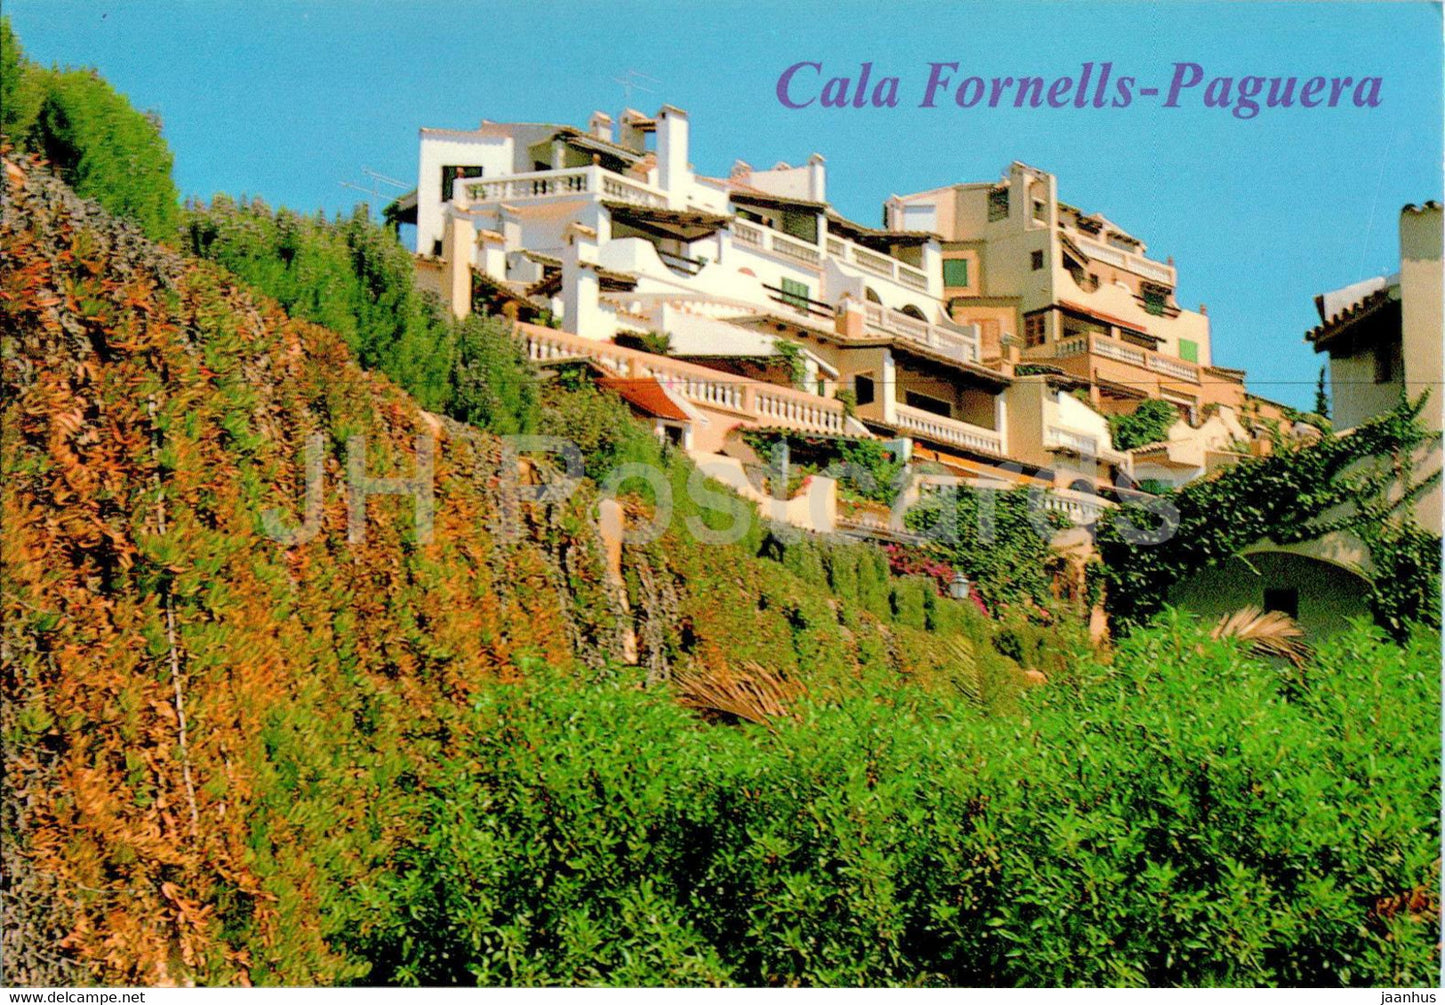 Cala Fornells - Paguera - Aldea Cala Fornells - Mallorca - 2918 - Spain - unused - JH Postcards